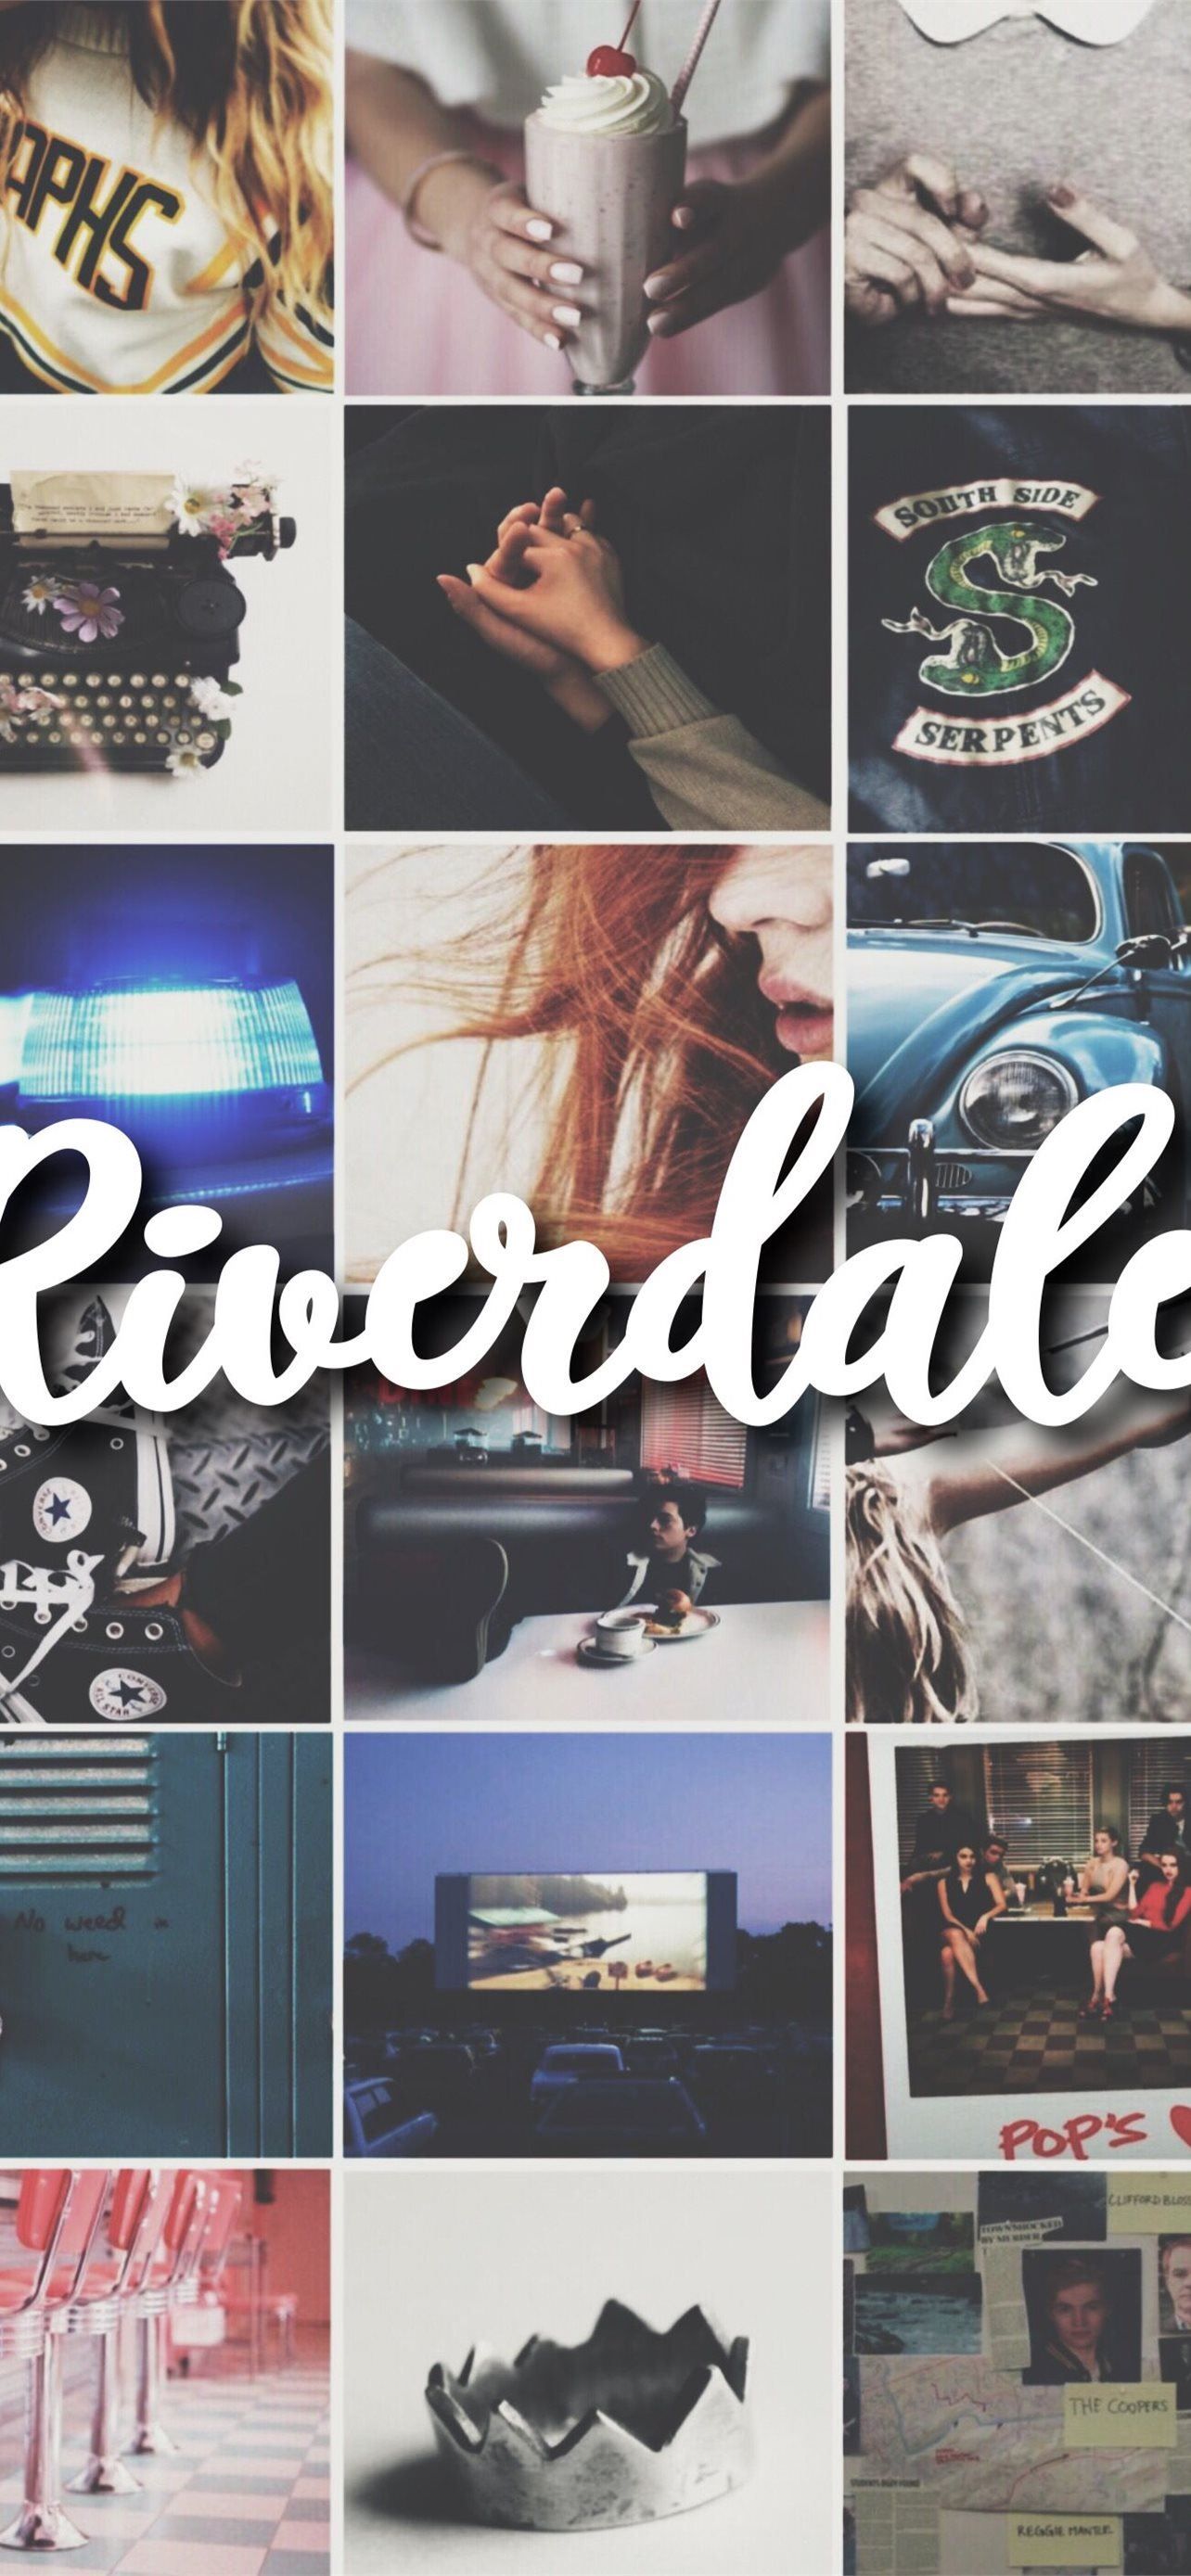 Aesthetic Riverdale teahub io iPhone Wallpaper Free Download